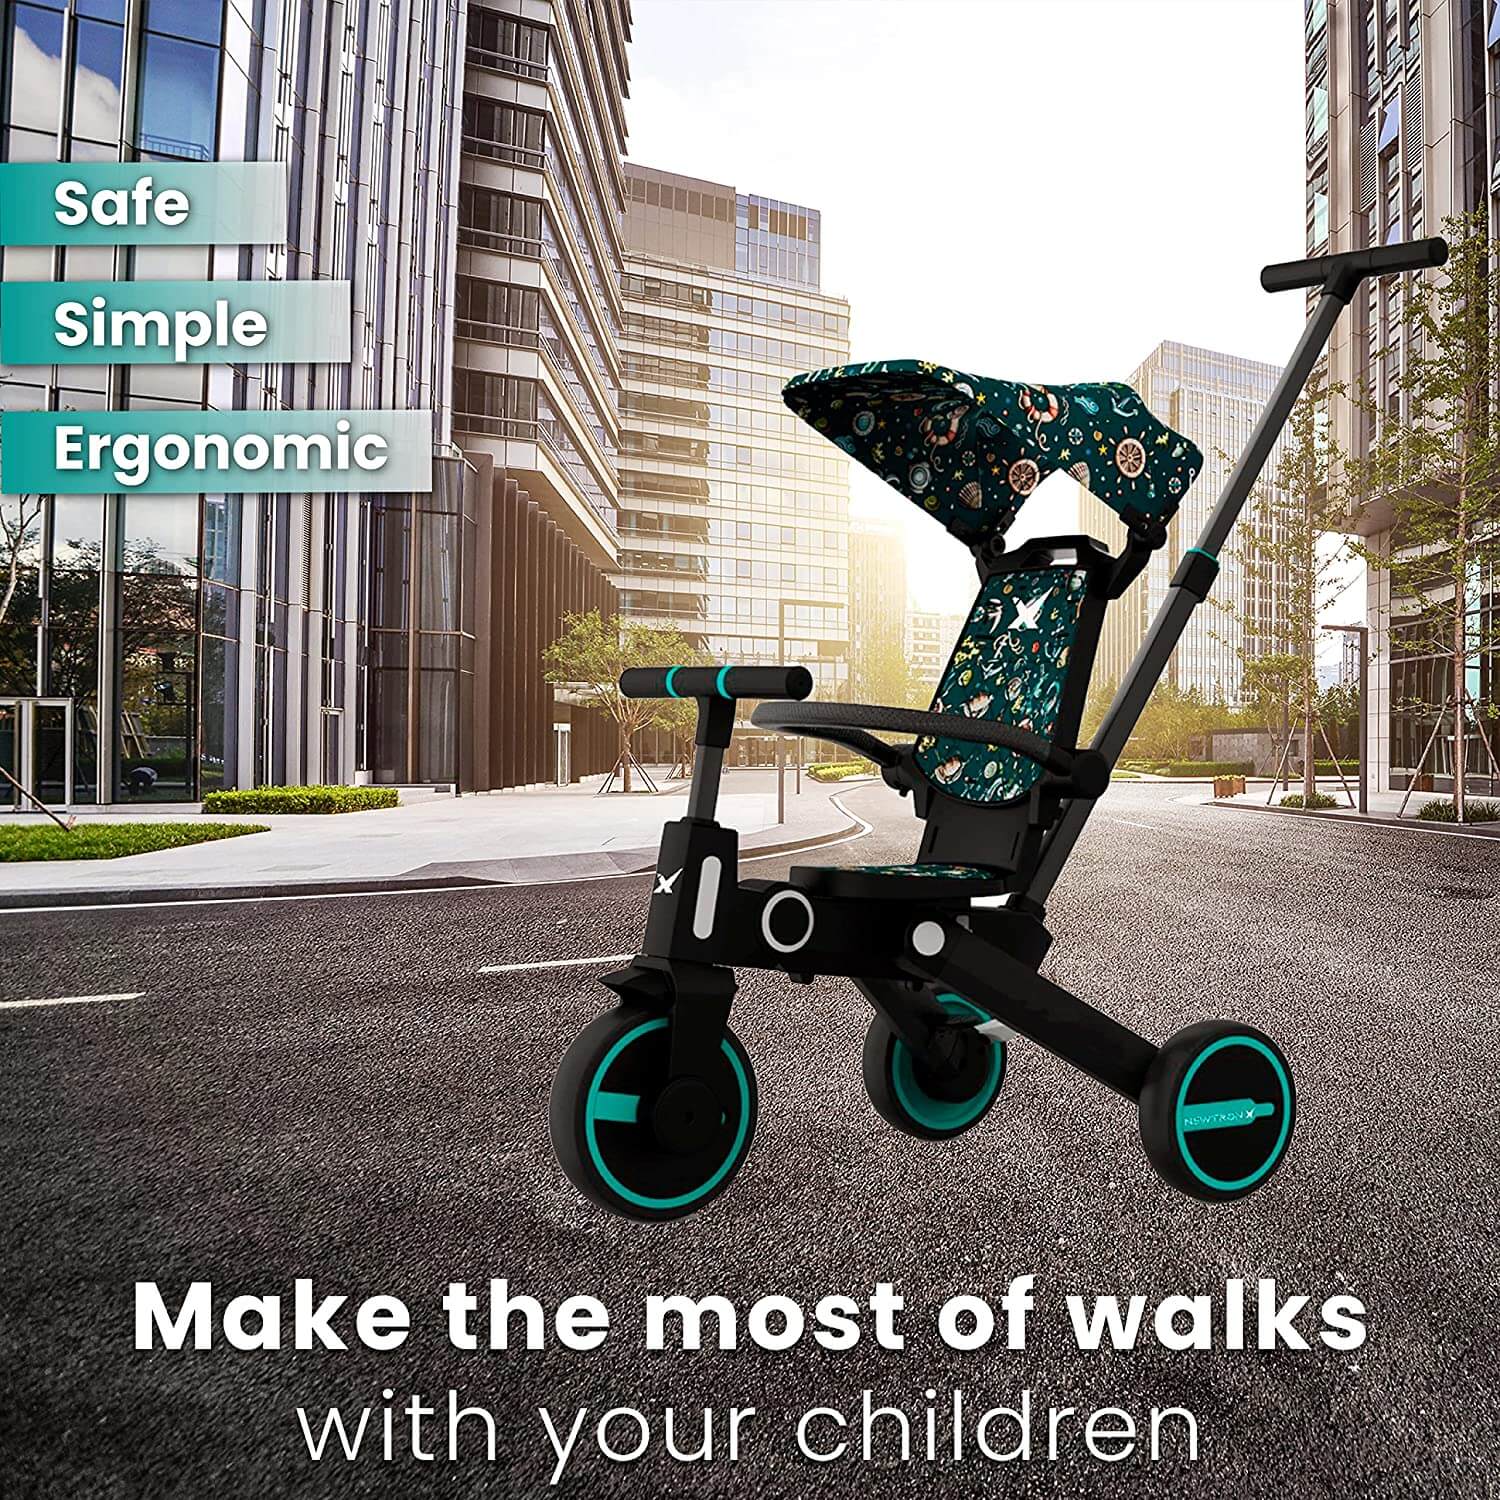 Megastar 7 in 1 Foldable & Reversible  Tricycle Stroller for Toddler-Blue